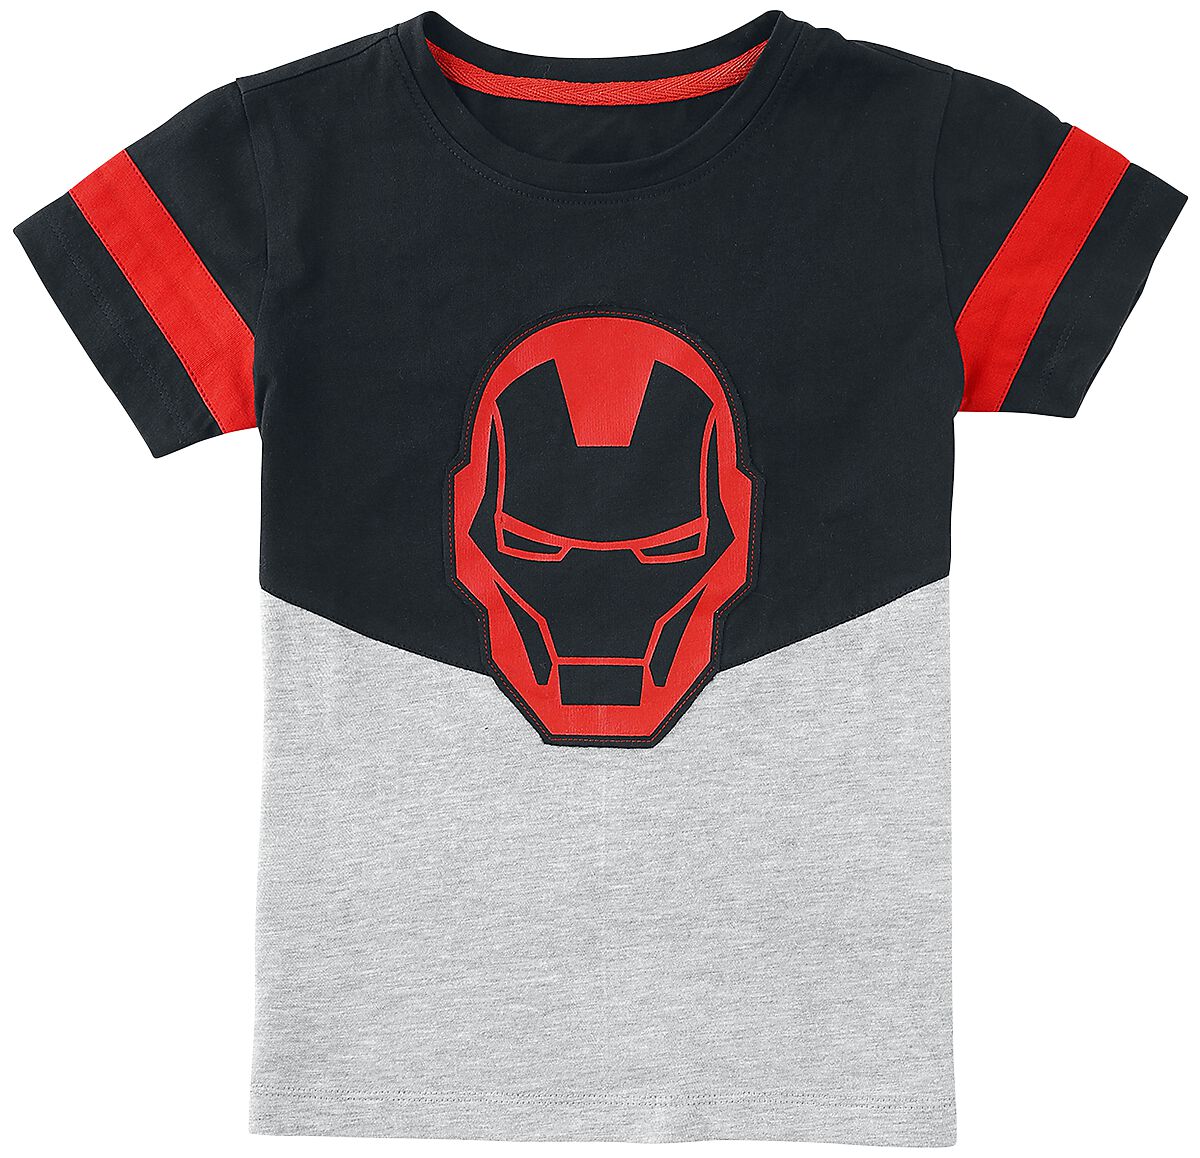 Iron Man Mask T-Shirt mixed grey black